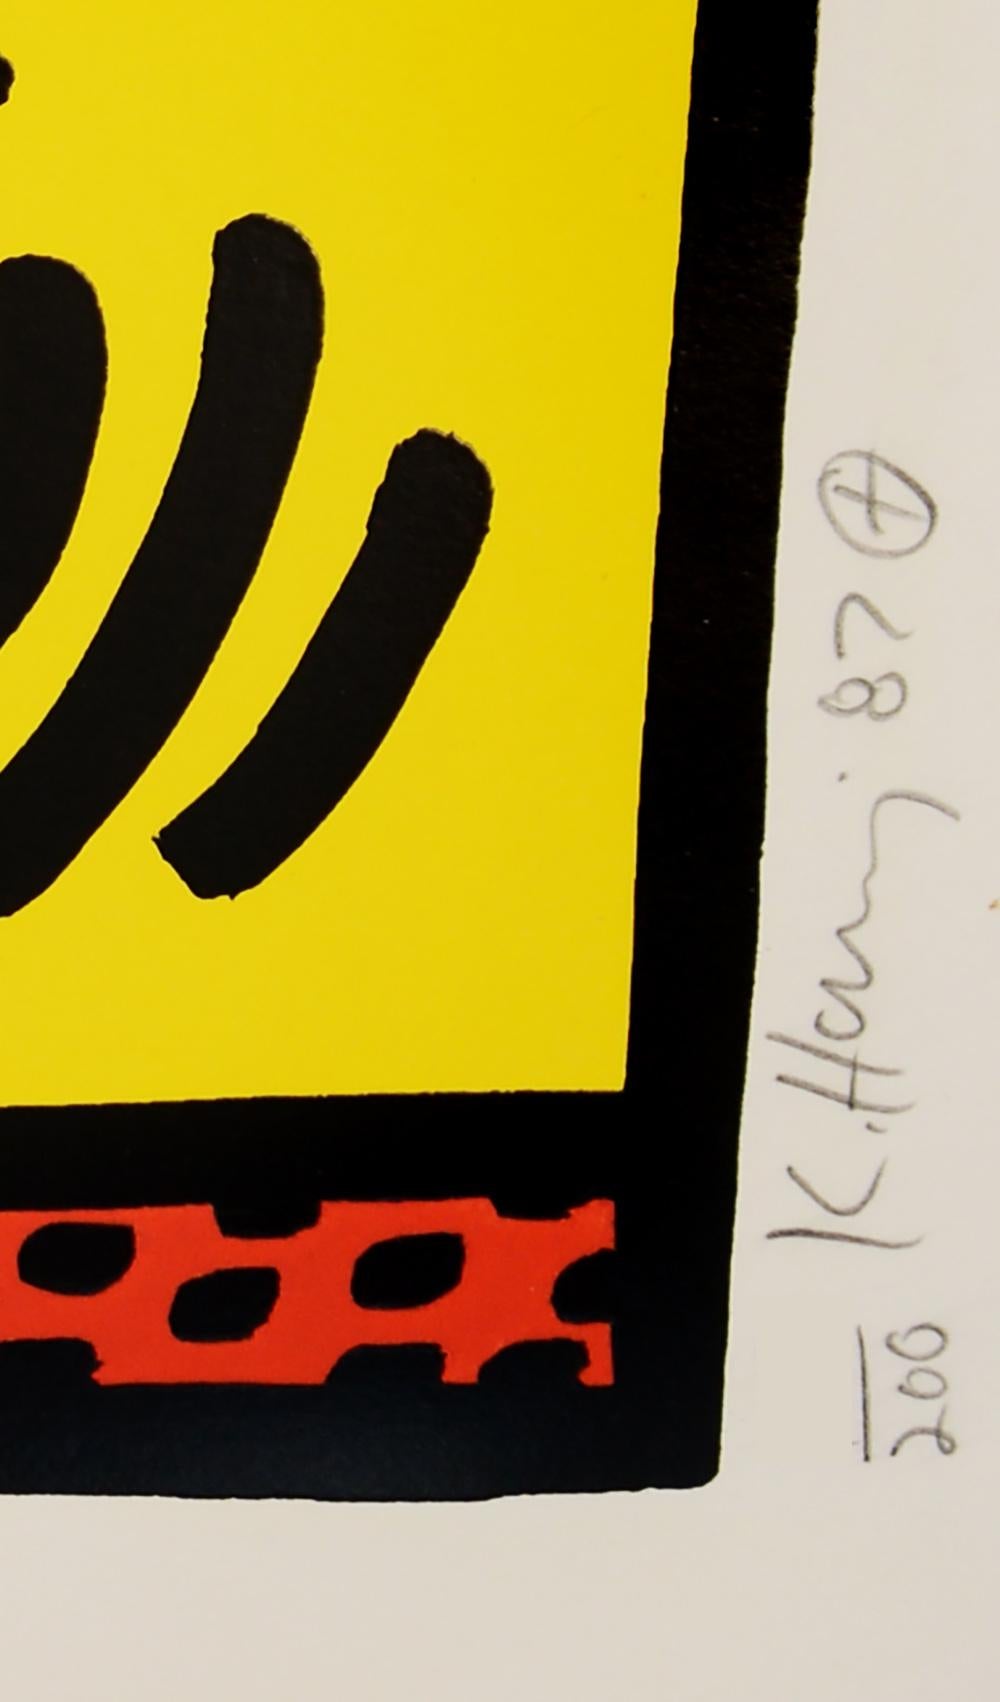 Pop Shop I: One Plate - Pop Art, Screenprint, Keith Haring, Contemporary Art 1